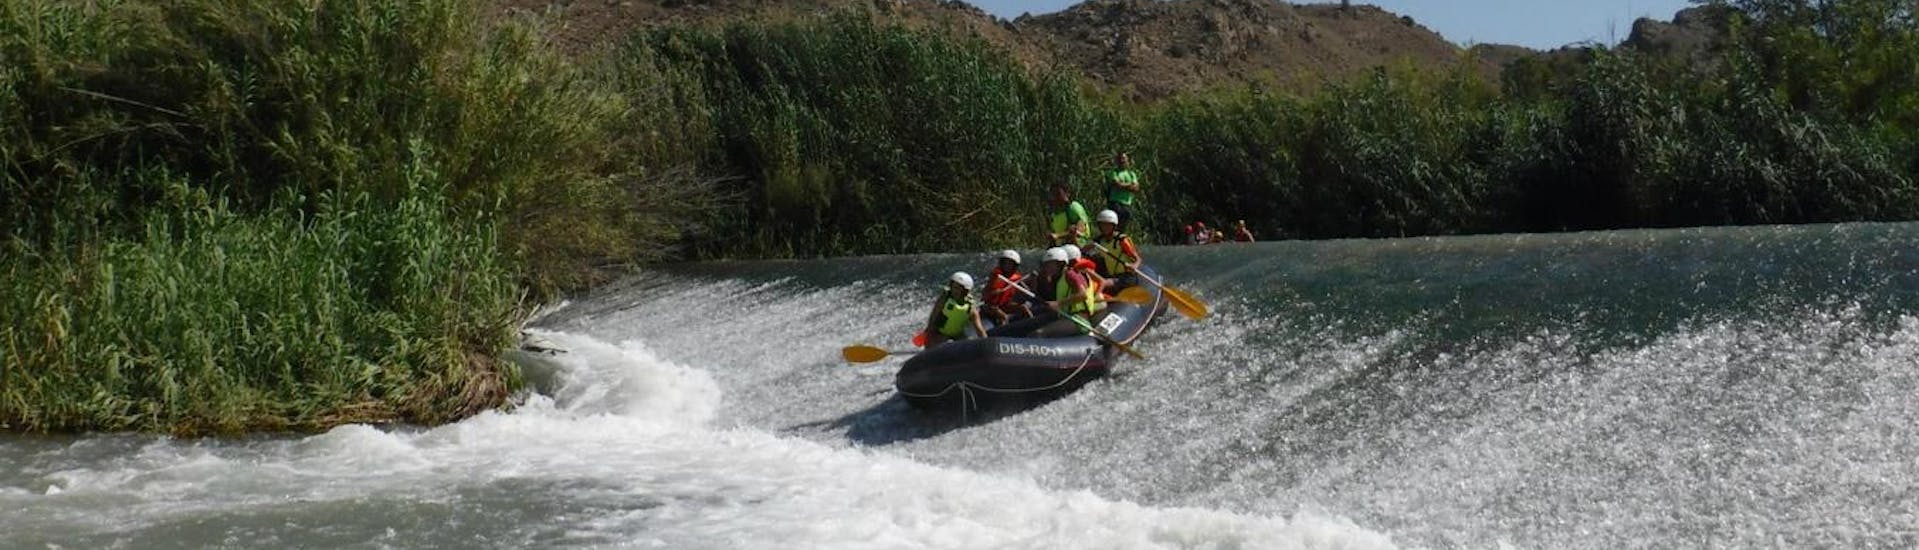 Rafting "Easy and Long" - Río Segura .